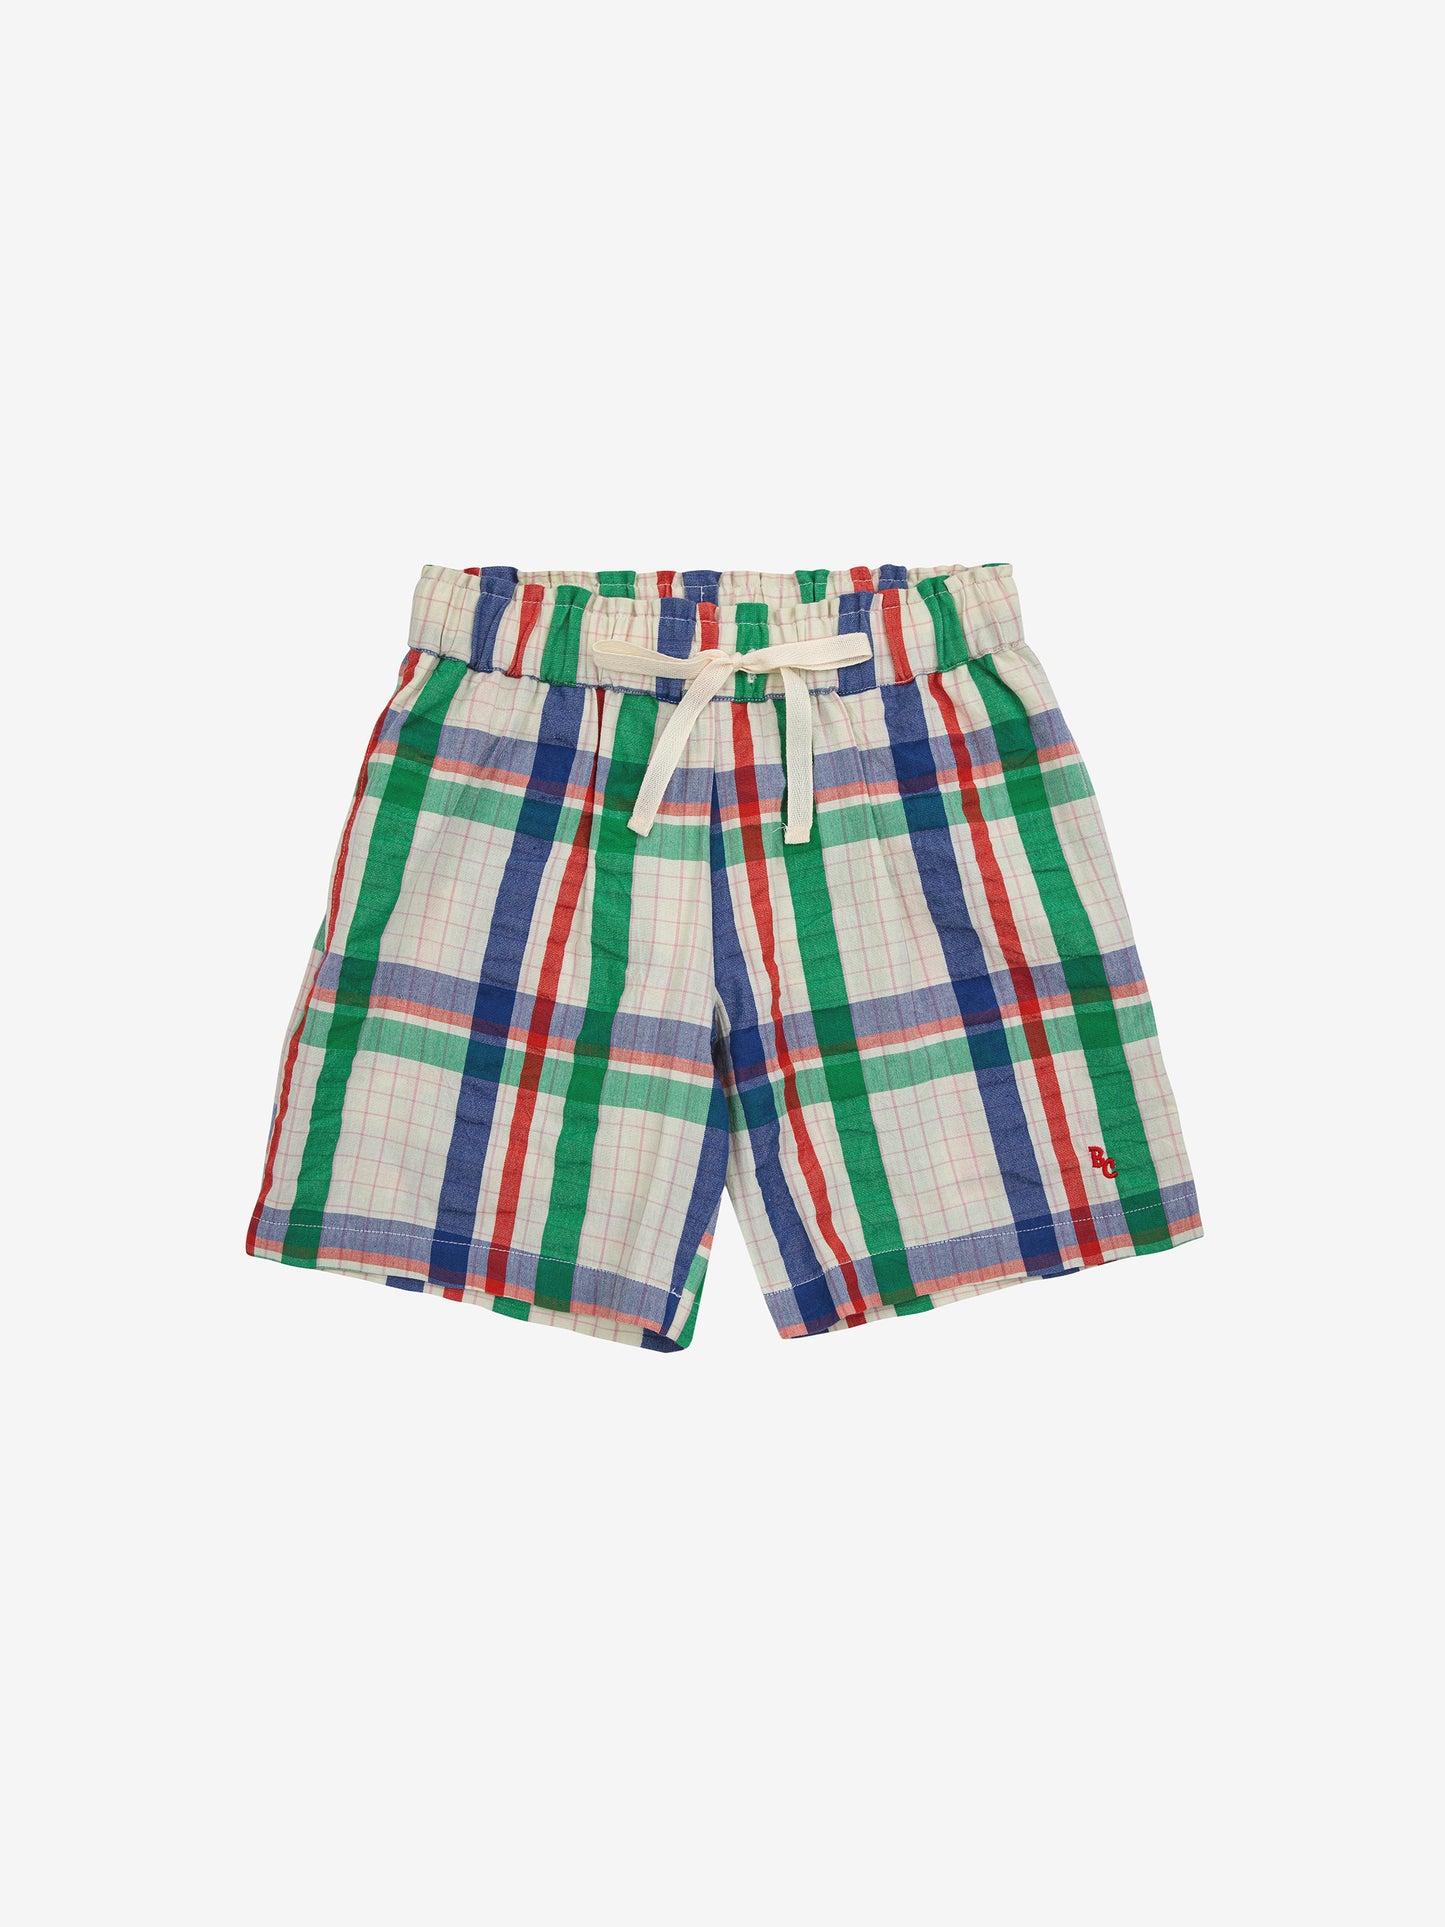 +Bobo Choses+ Madras Checks Woven Bermuda Shorts